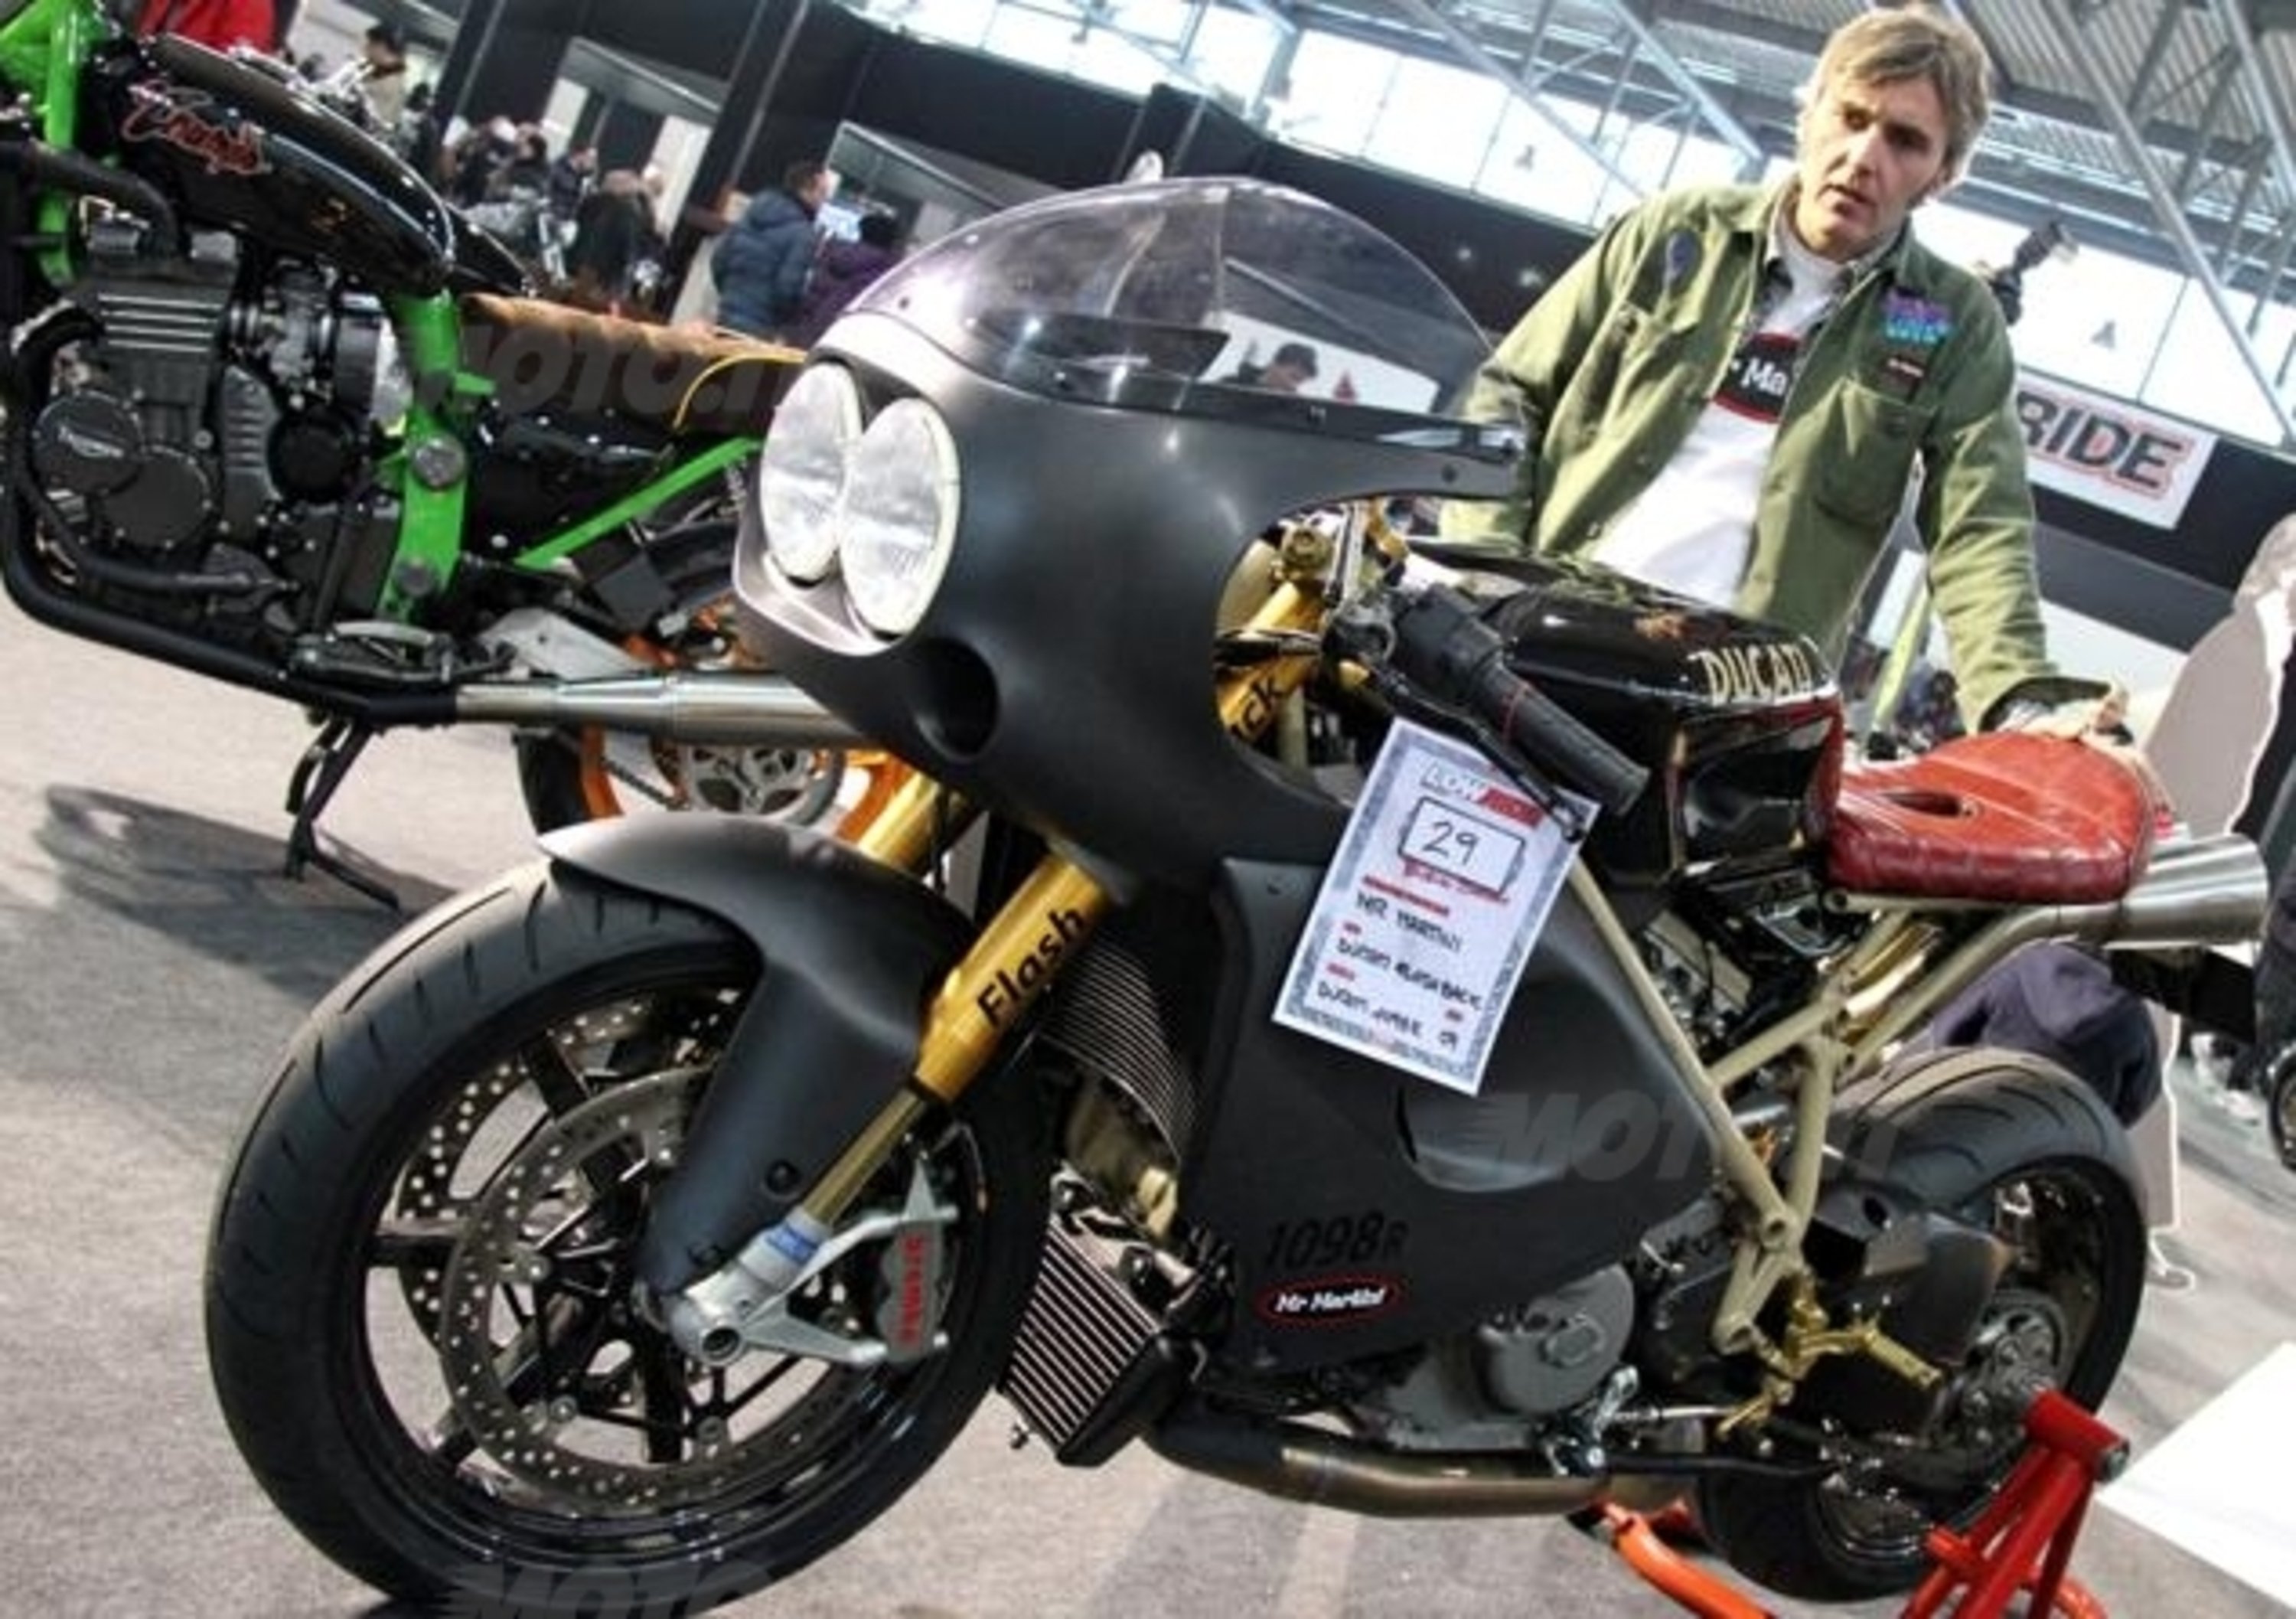 Le special pi&ugrave; belle del Motor Bike Expo di Verona